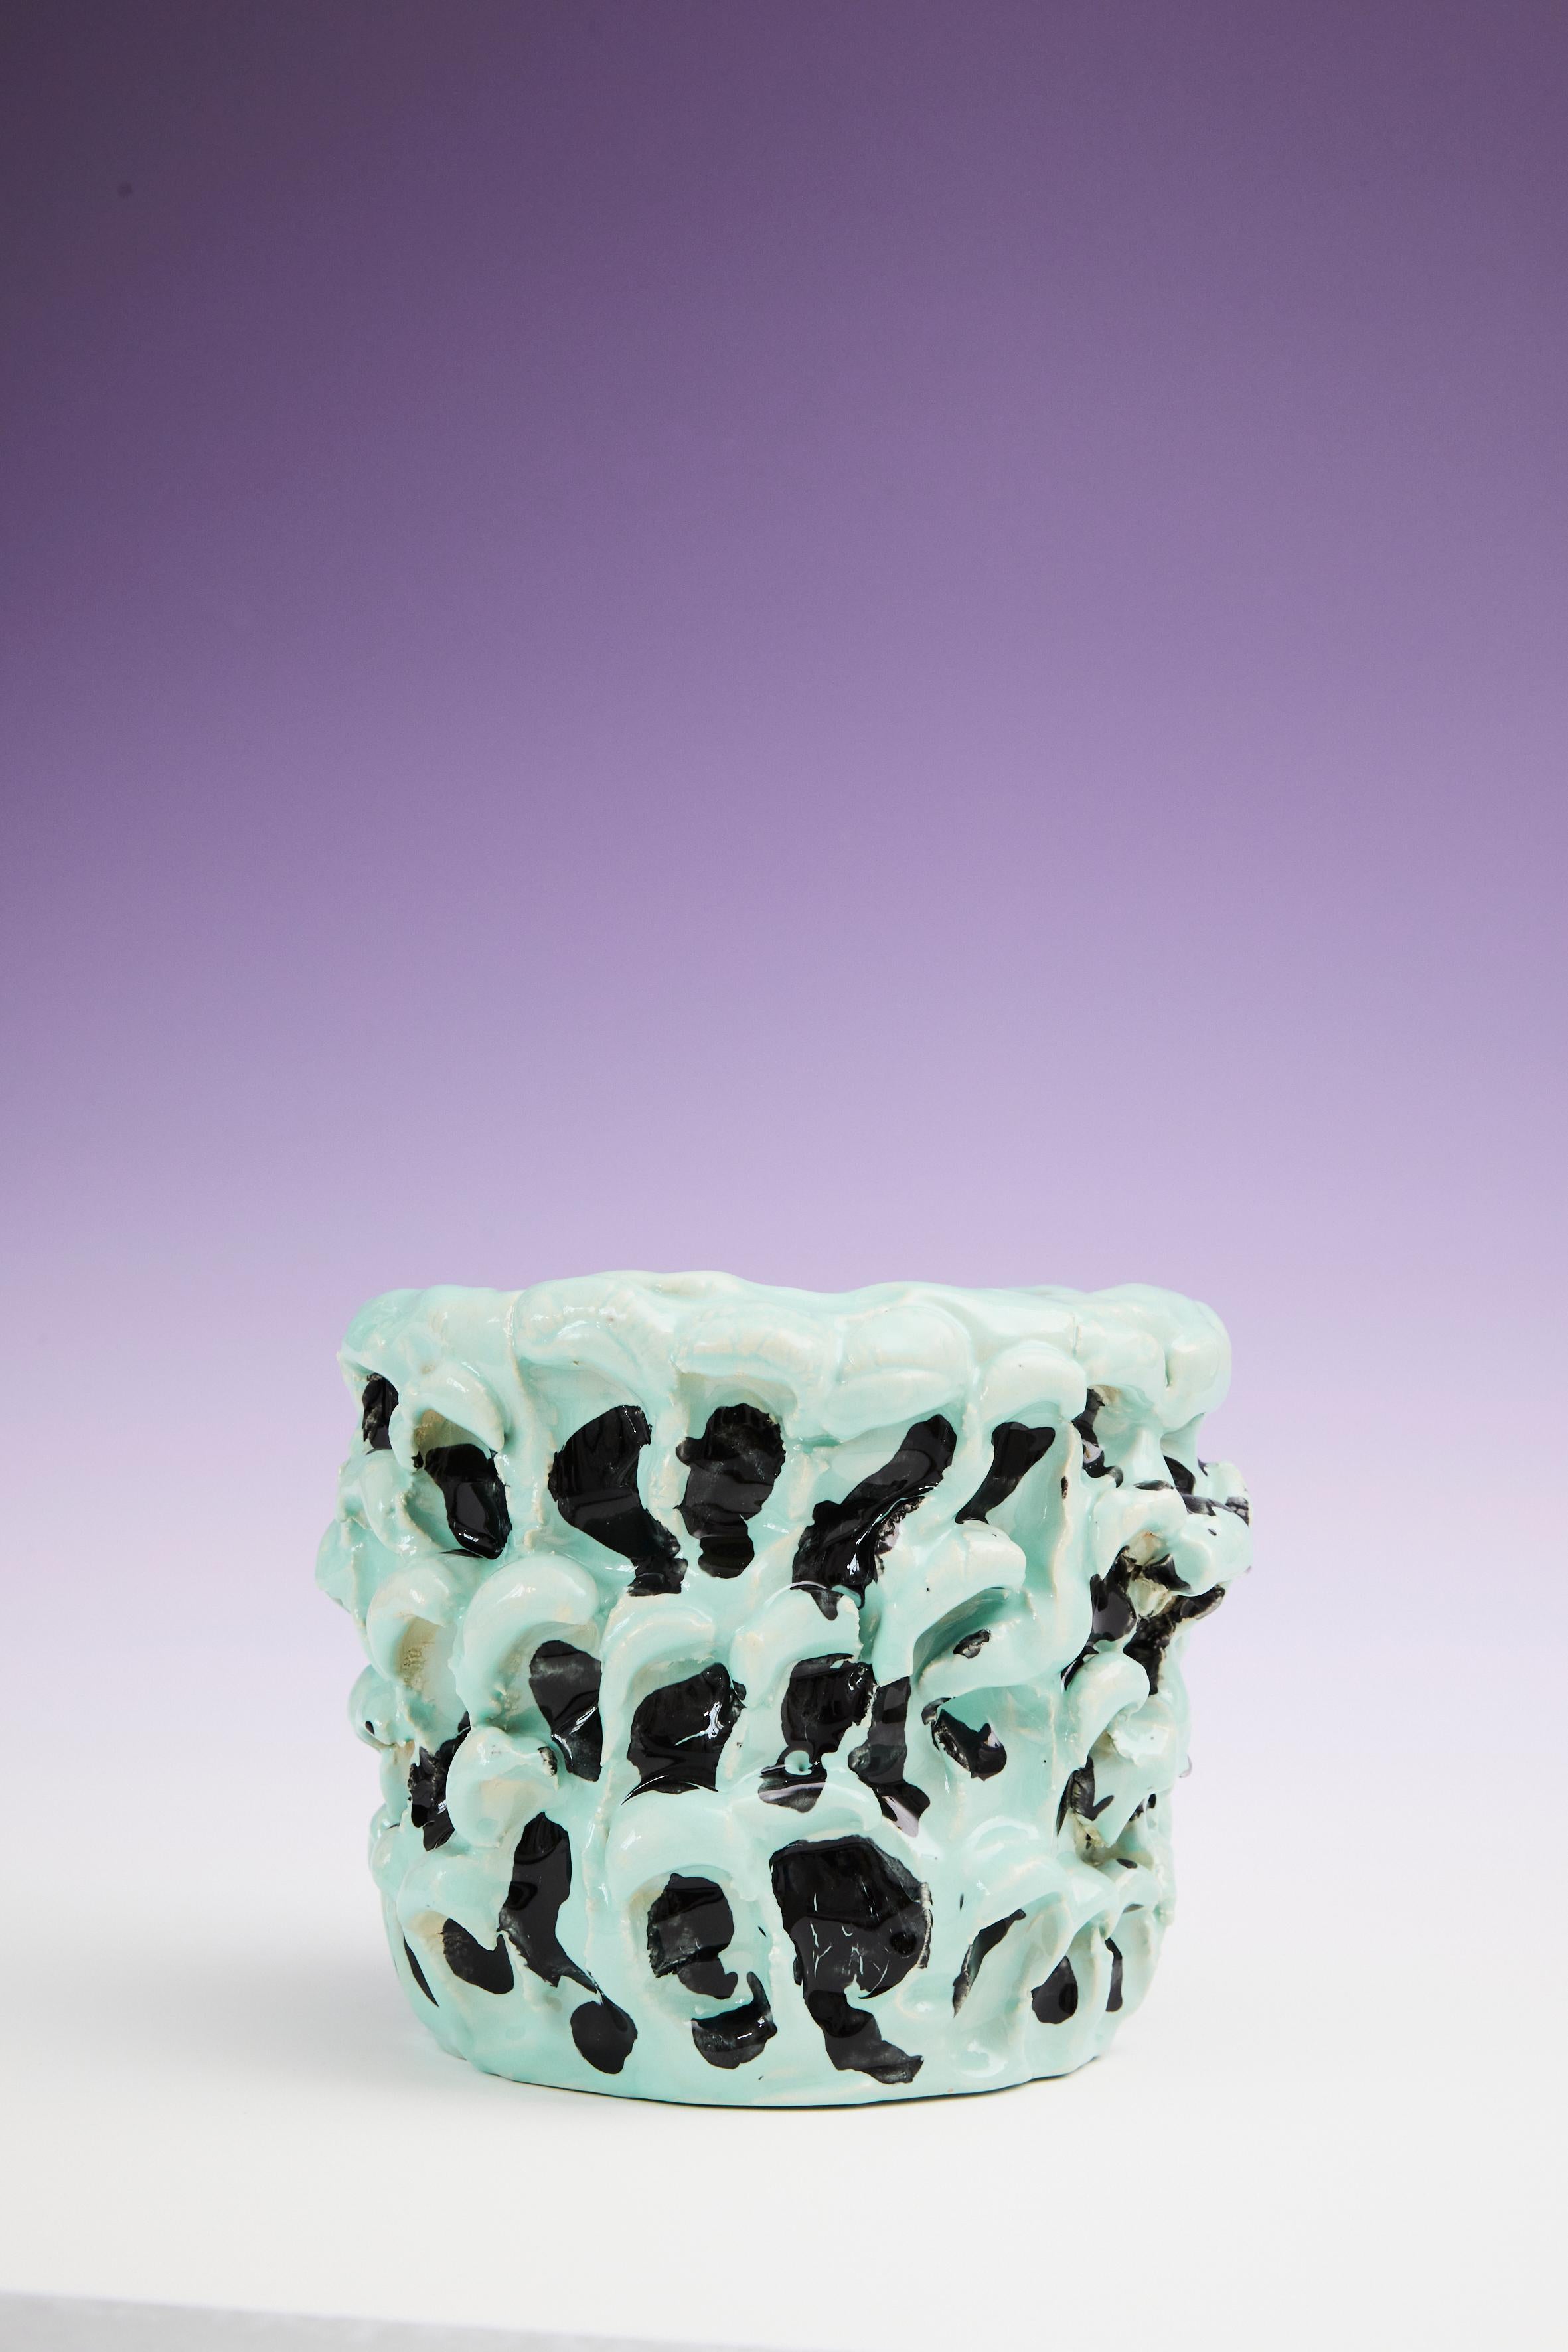 Onda Vase in Tiffany and Pitch Black n. 01 / 20 numbered serie
Unique Handmade Piece
Glazed earthenware by Daria Dazzan
Earthenware, glazes
19 X 16 cm ab.

Handmade earthenware vase by Daria Dazzan, unique piece, numbered.
Daria Dazzan